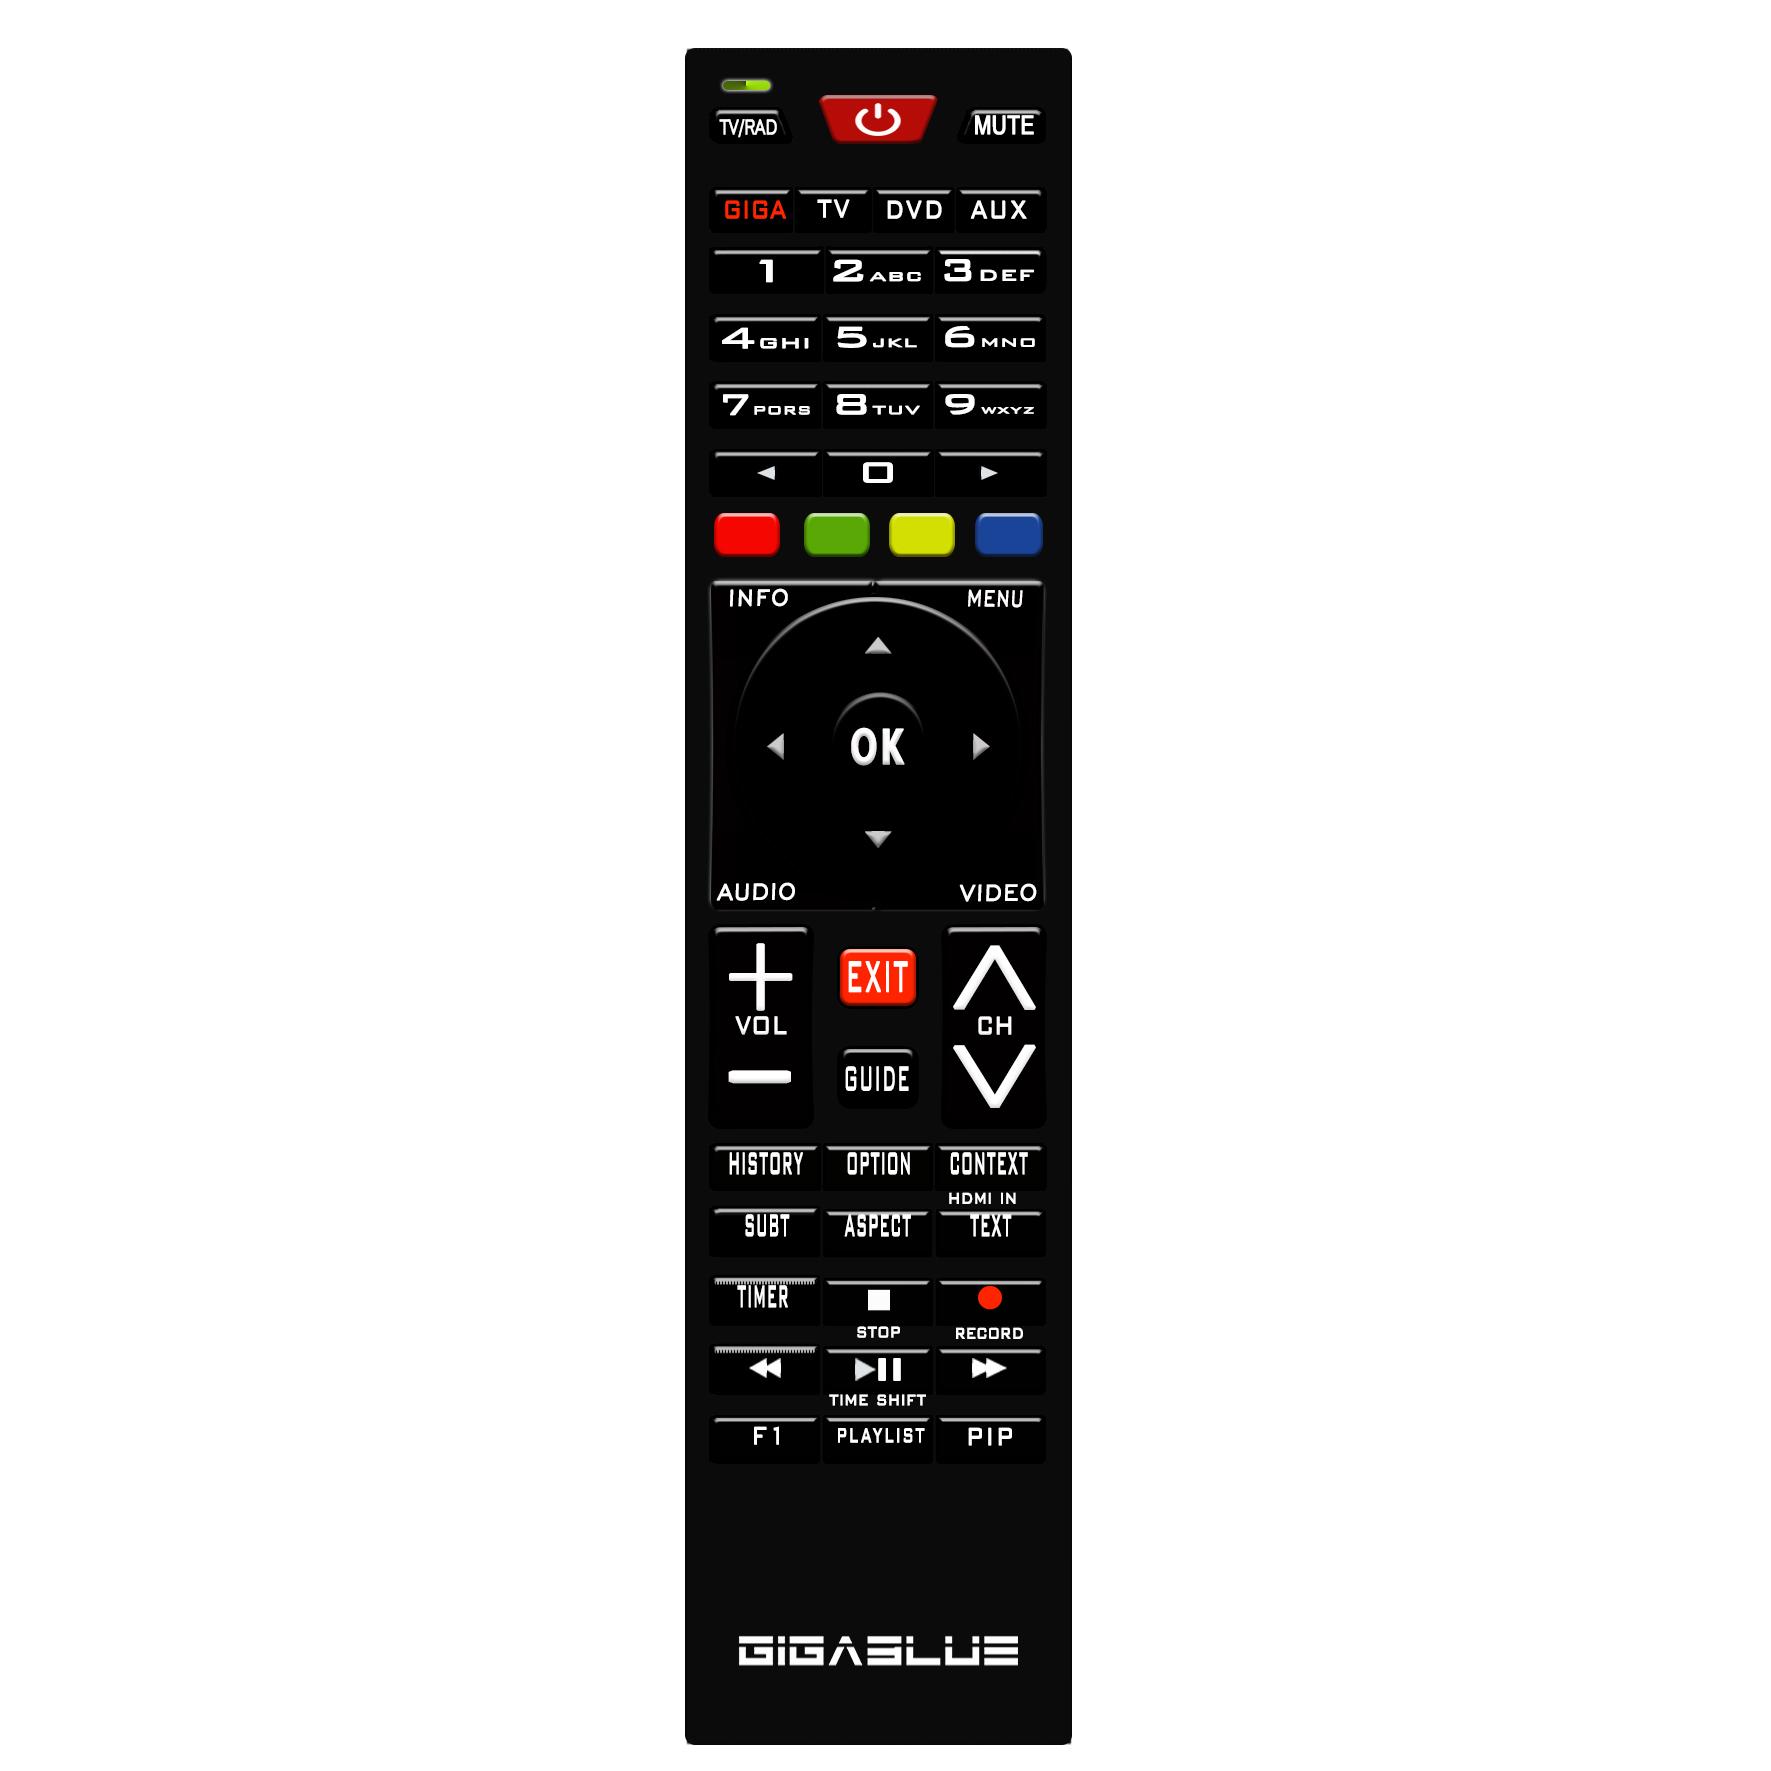 Gigablue 4K UE Receiver FBC 2xDVB-S2 1x DVB-C Combo Sat+Kabel TV E2 UHD 2160p 